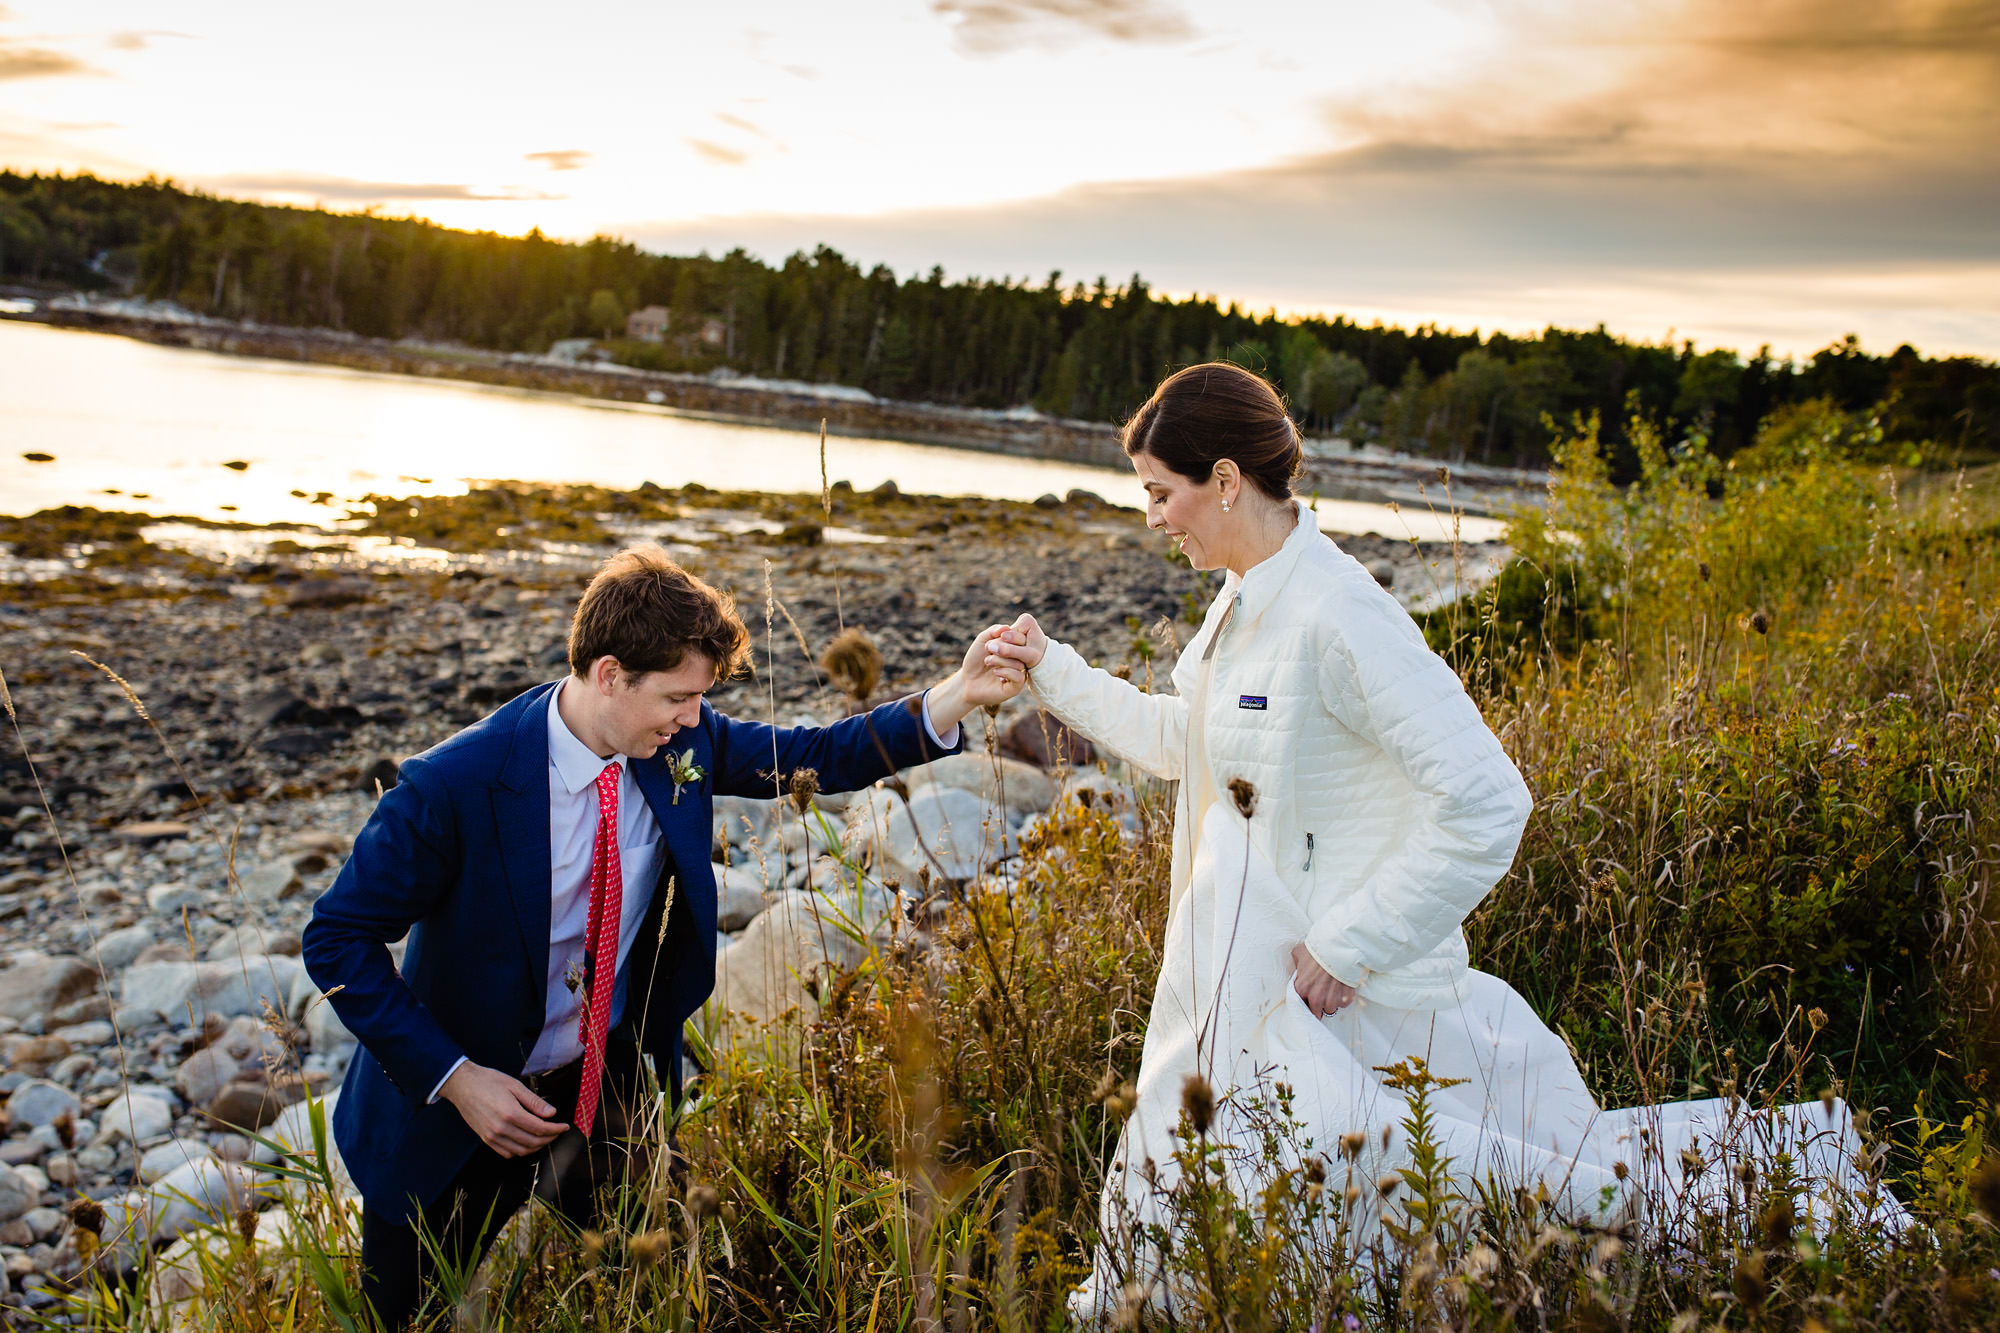 Striking and creative wedding portraits taken on the coast of Maine